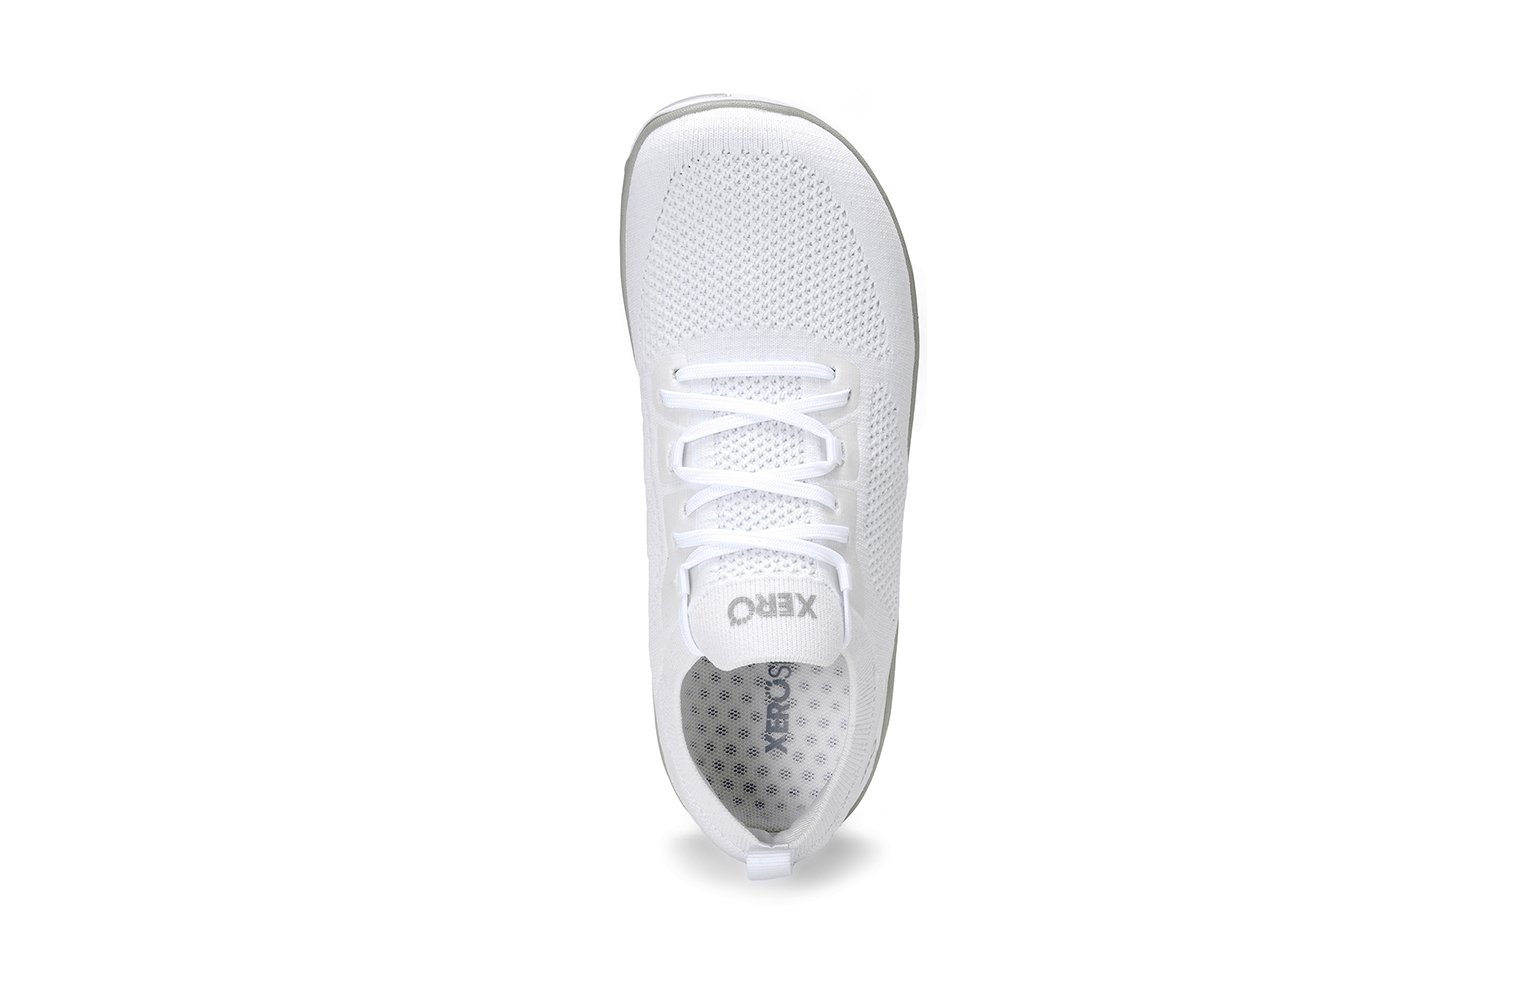 Xero Shoes, Nexus Knit, NEXW-WHTE, white, dames, maat 38 eu